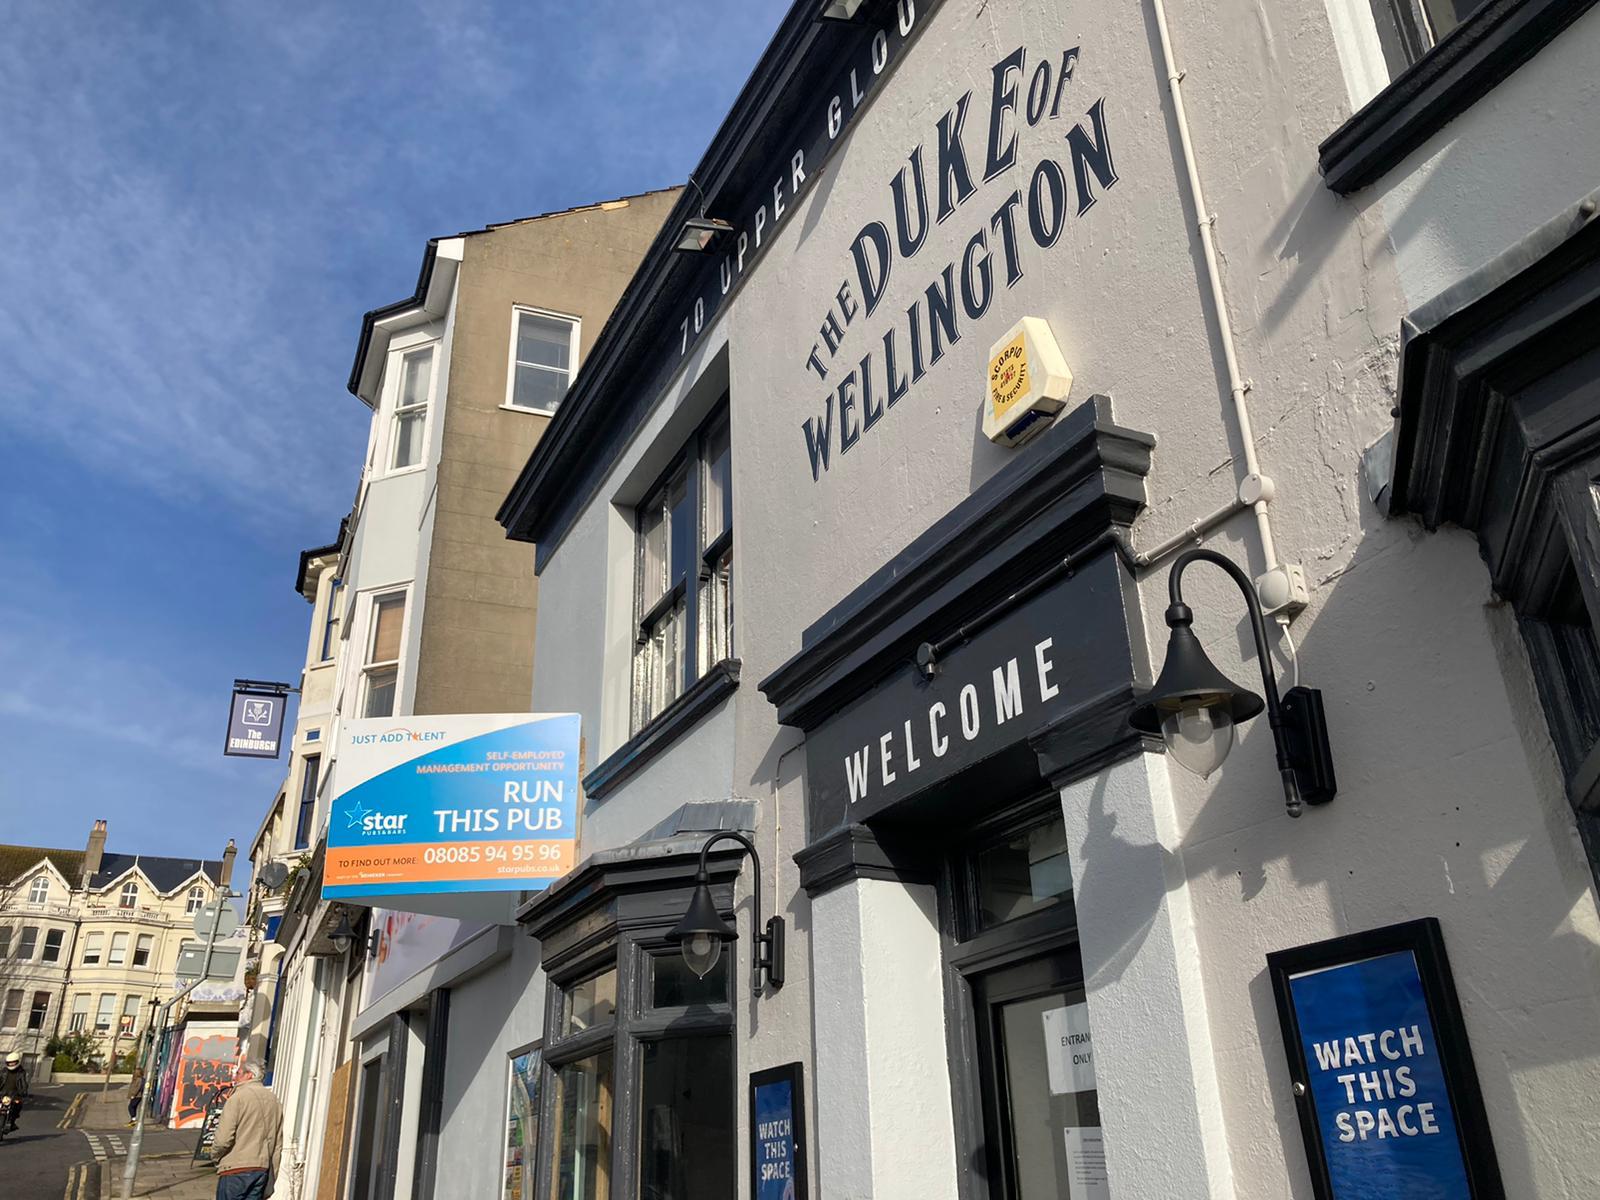 The Duke of Wellington pub in Upper Gloucester Road, Brighton